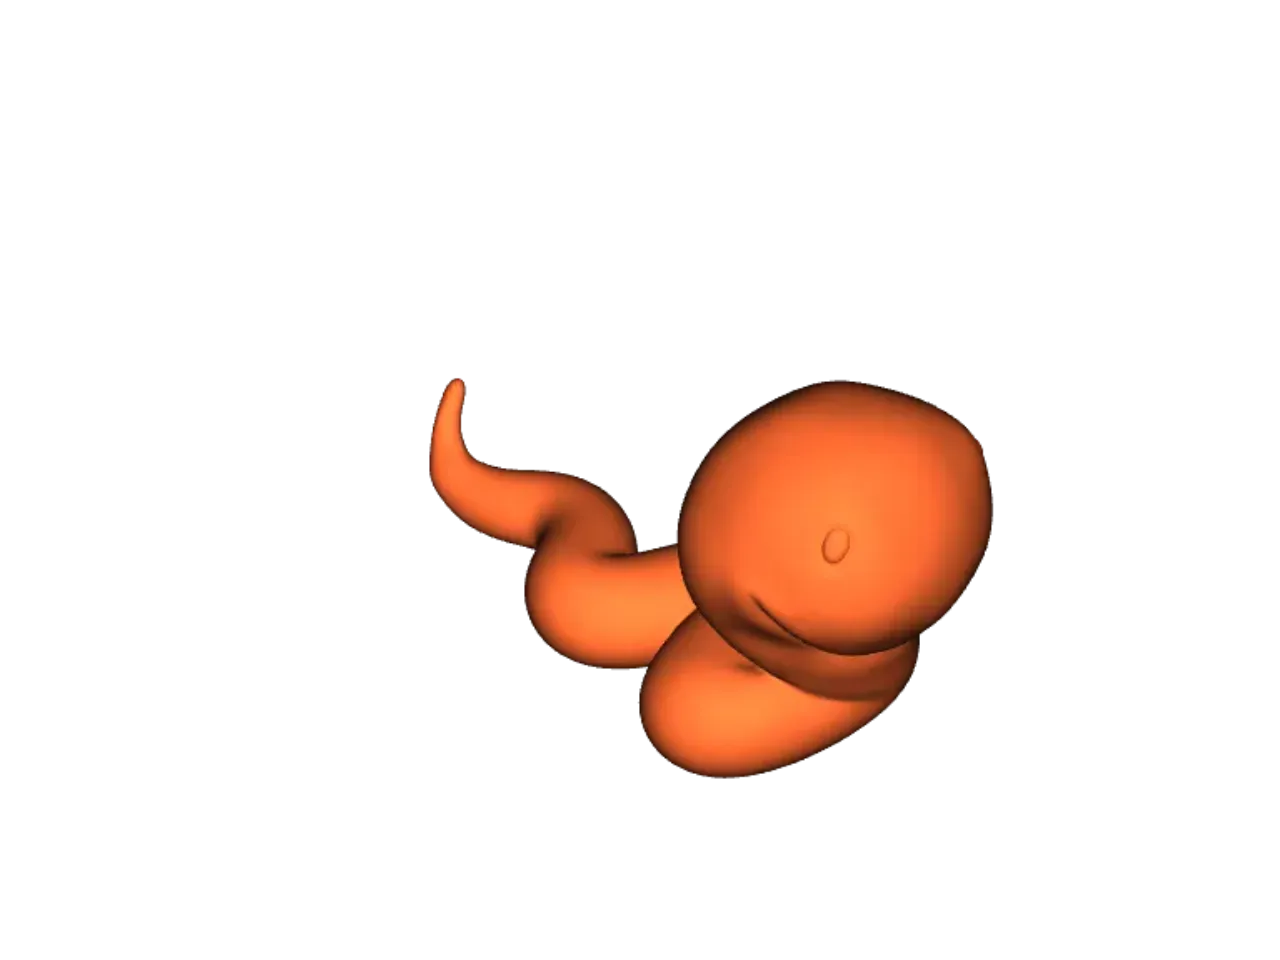 Cute Sperm